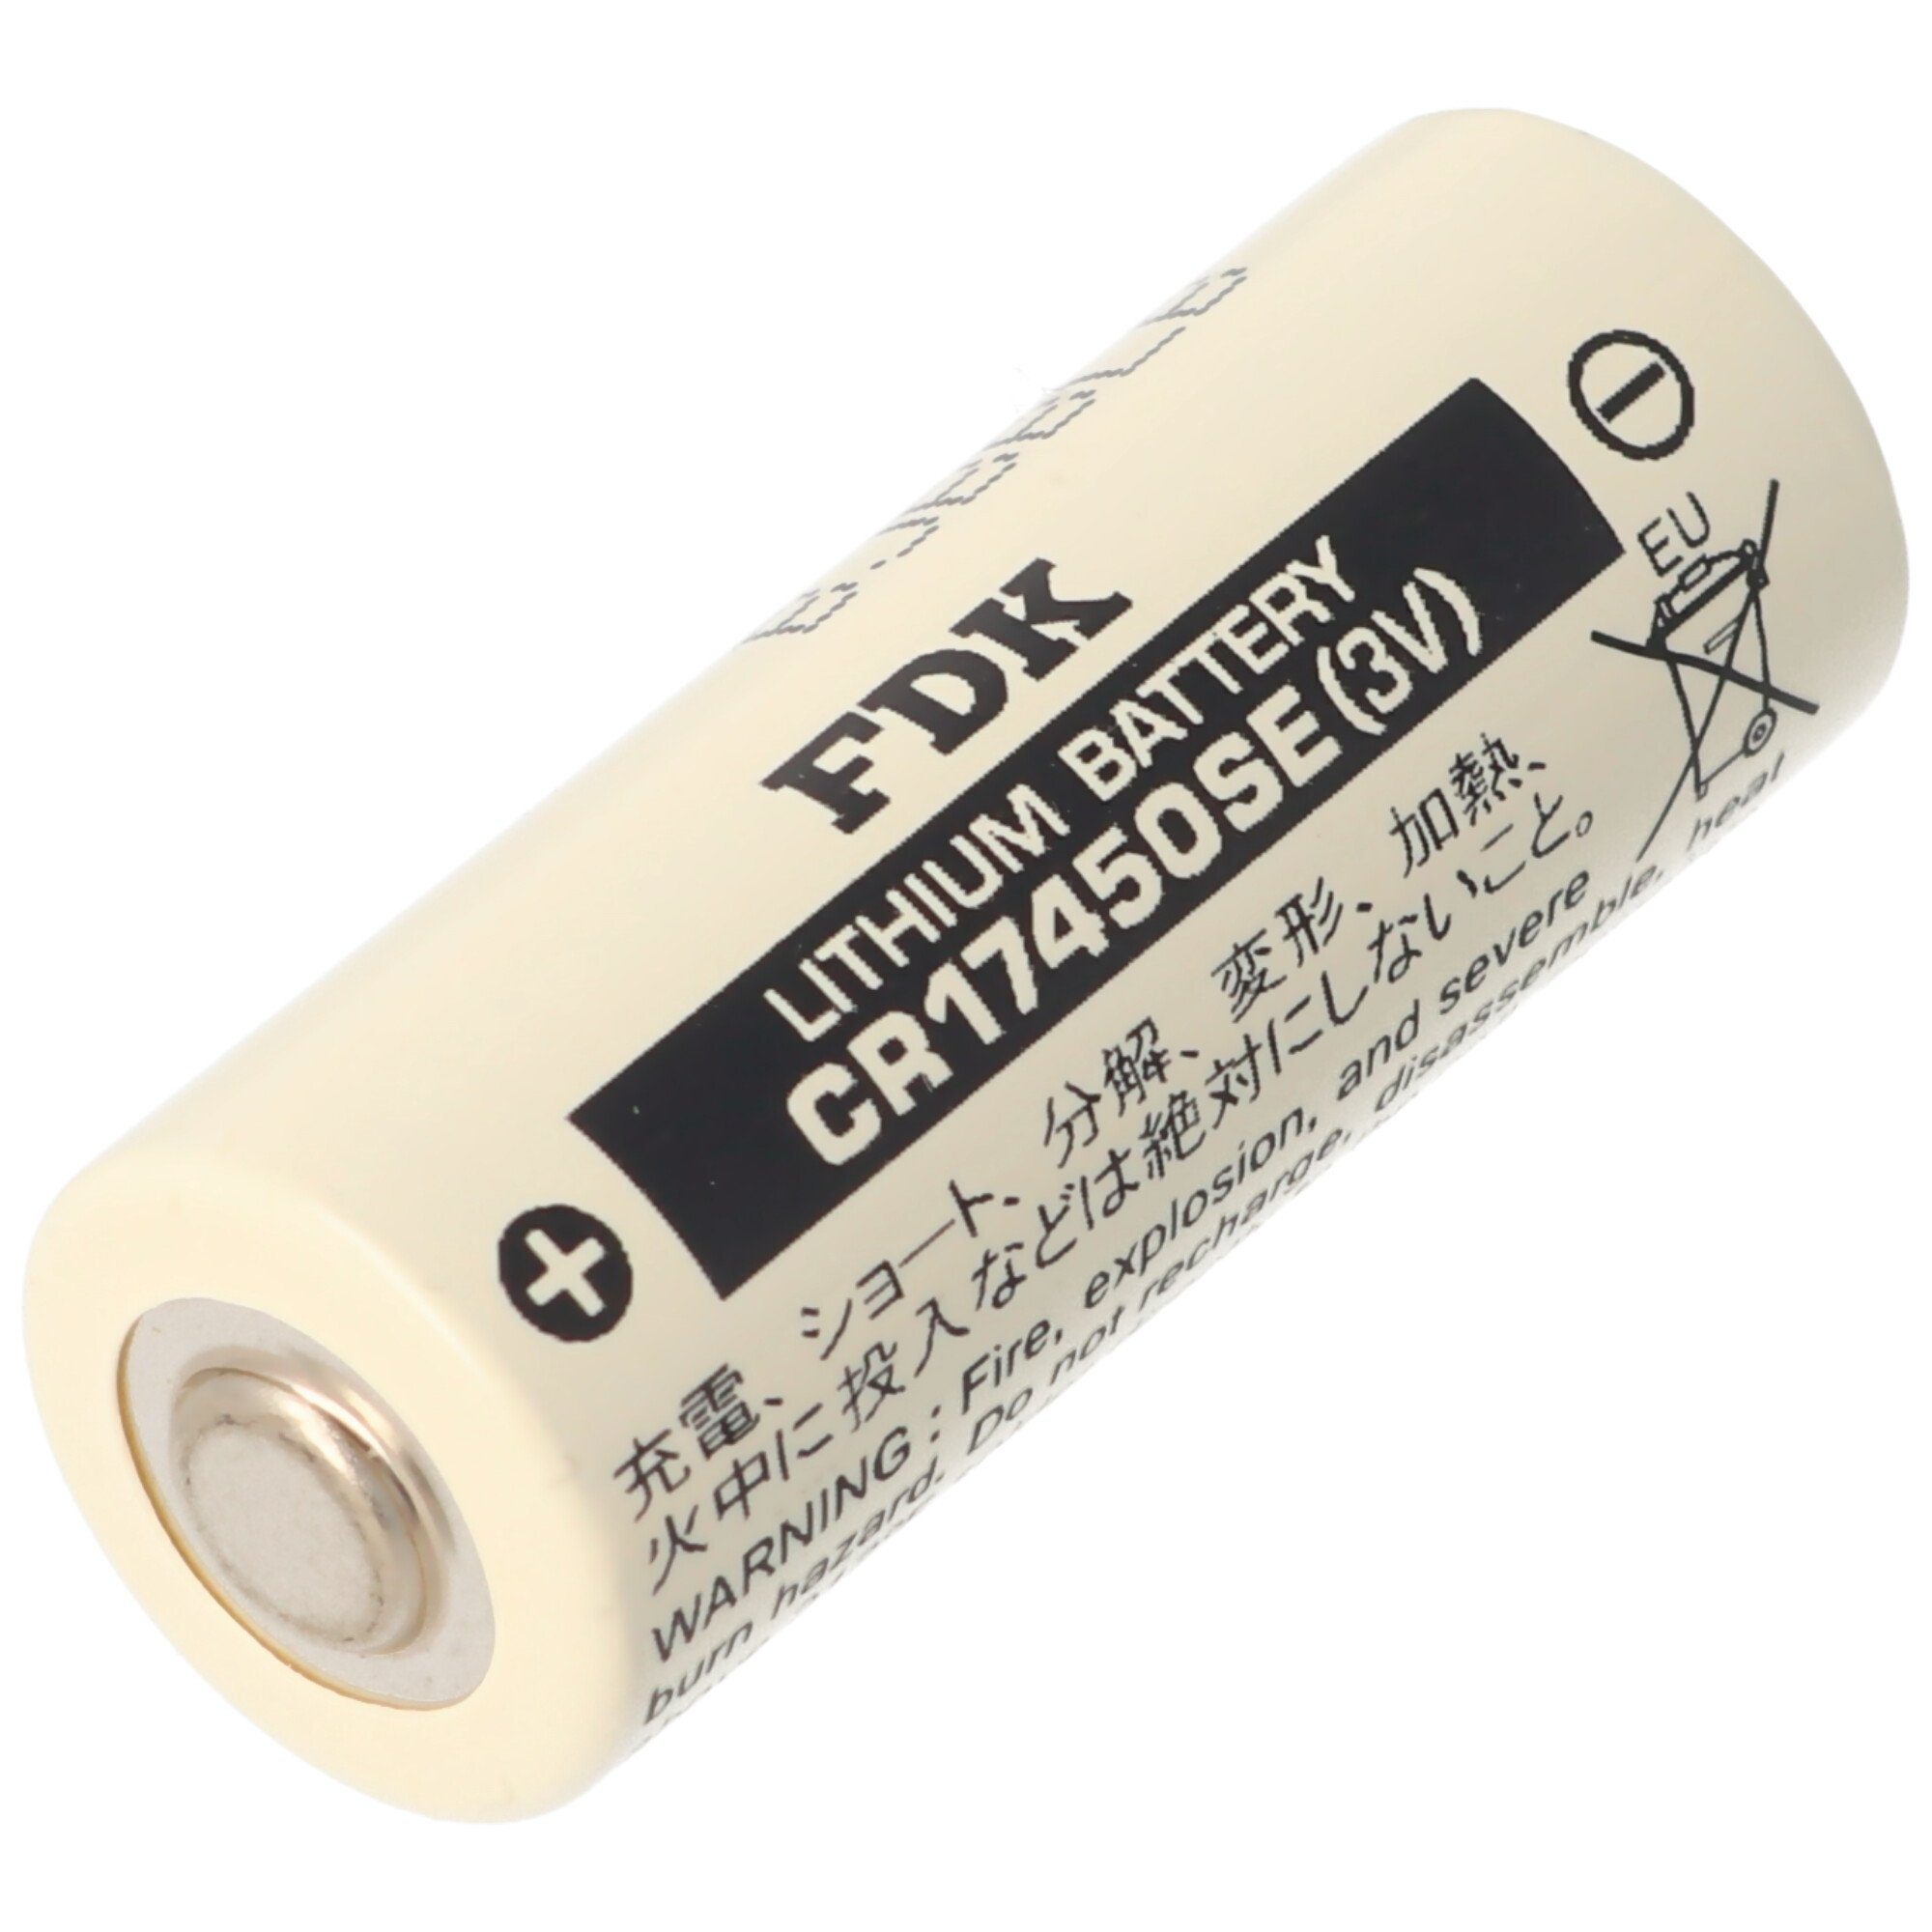 Sanyo Sanyo Lithium Batterie CR17450SE Size A, ohne Lötfahnen Batterie, (3,0 V)